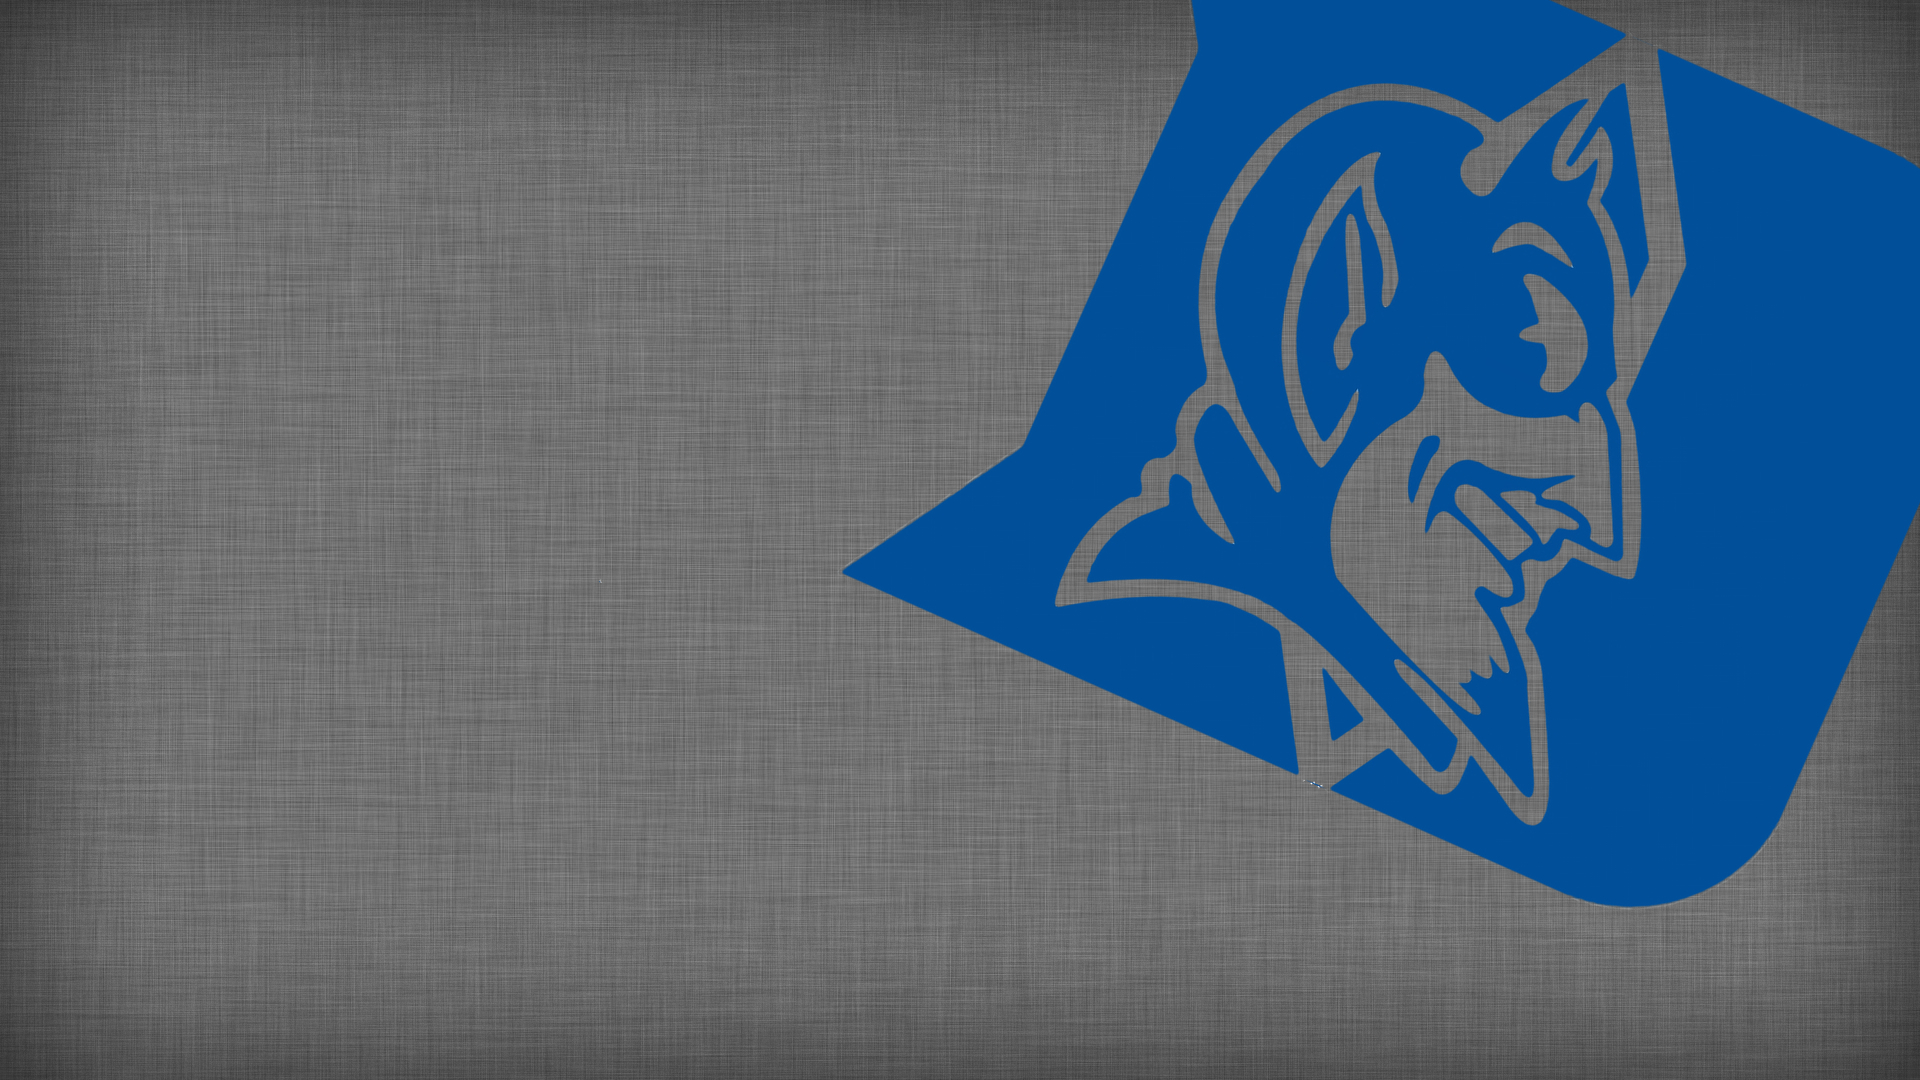 Duke Devils Logo Basketball wallpaper HD. Free desktop background ...